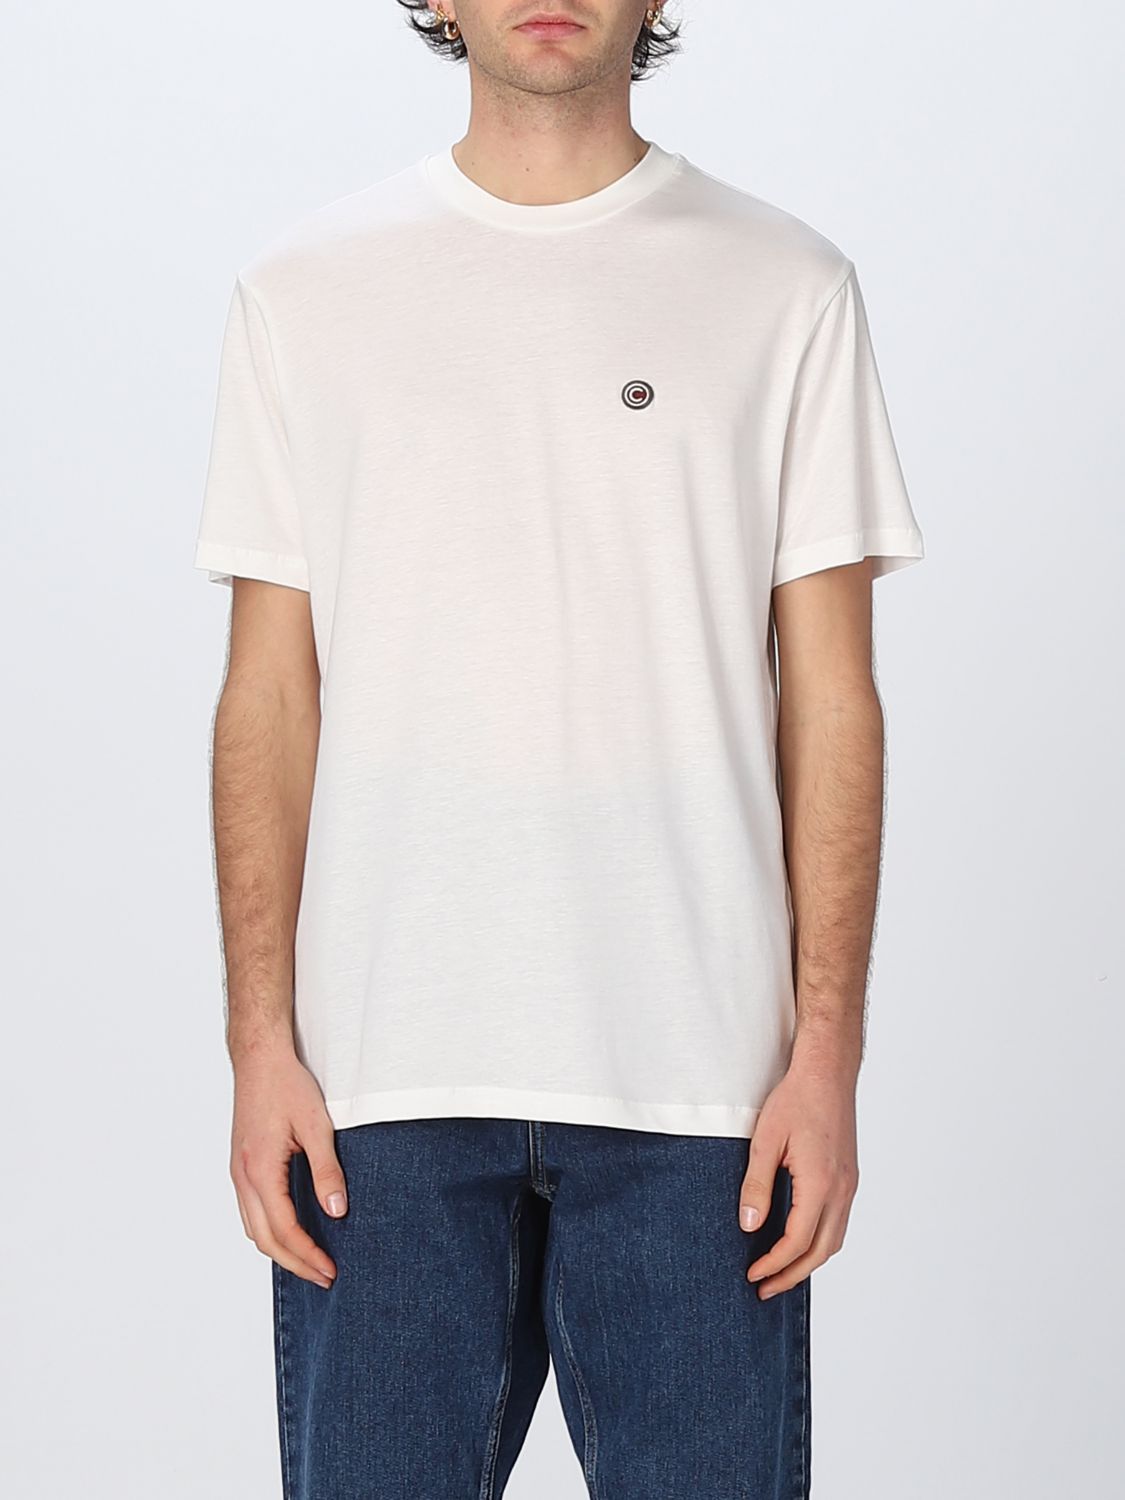 COLMAR: t-shirt for man - White | Colmar t-shirt 75798WS online on ...